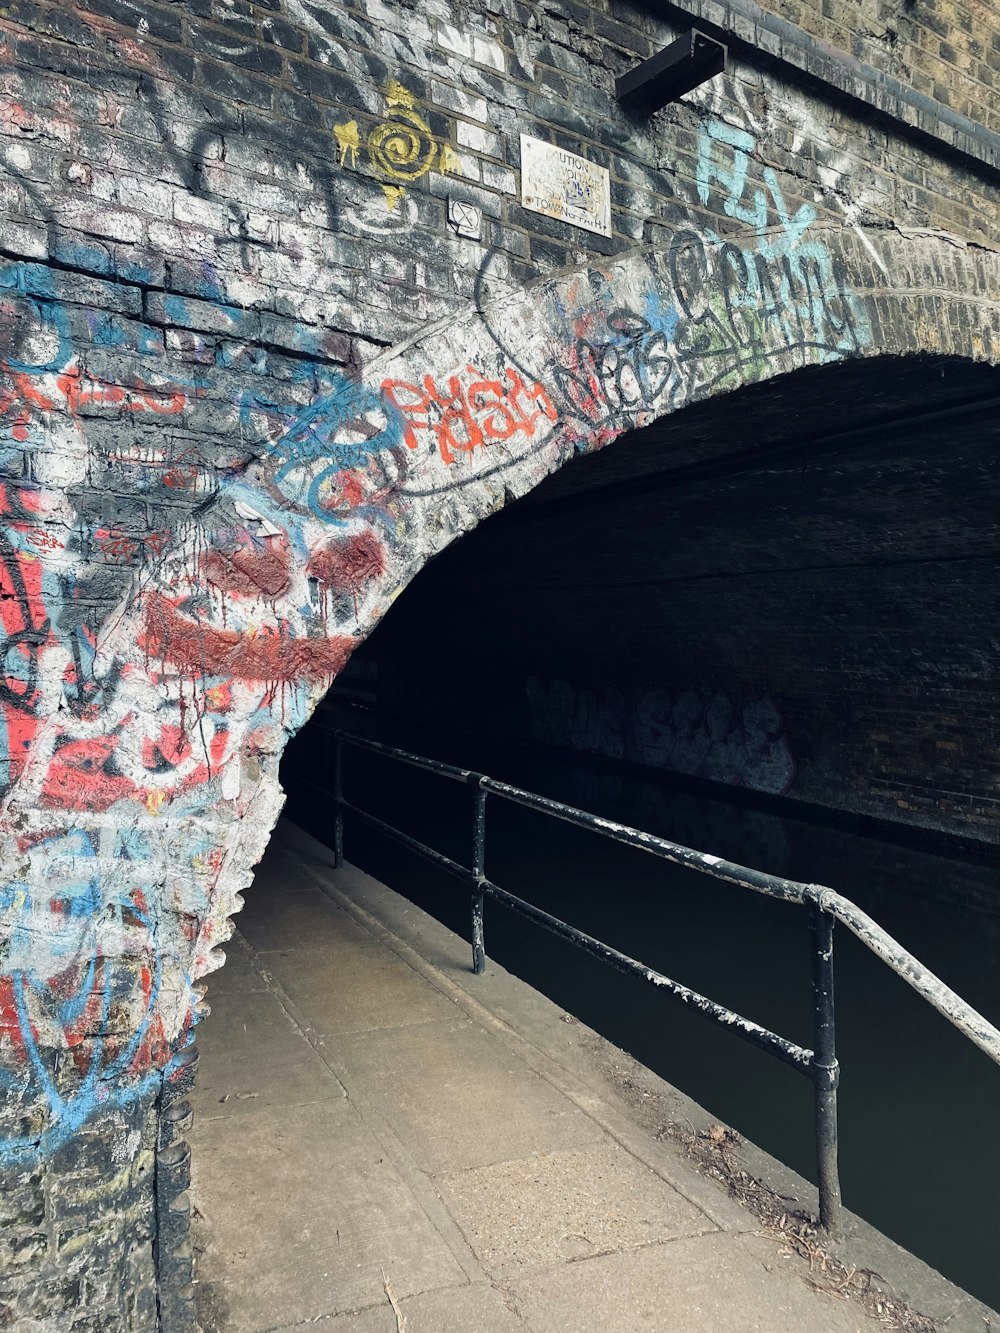 a bridge with graffiti on it and a railing